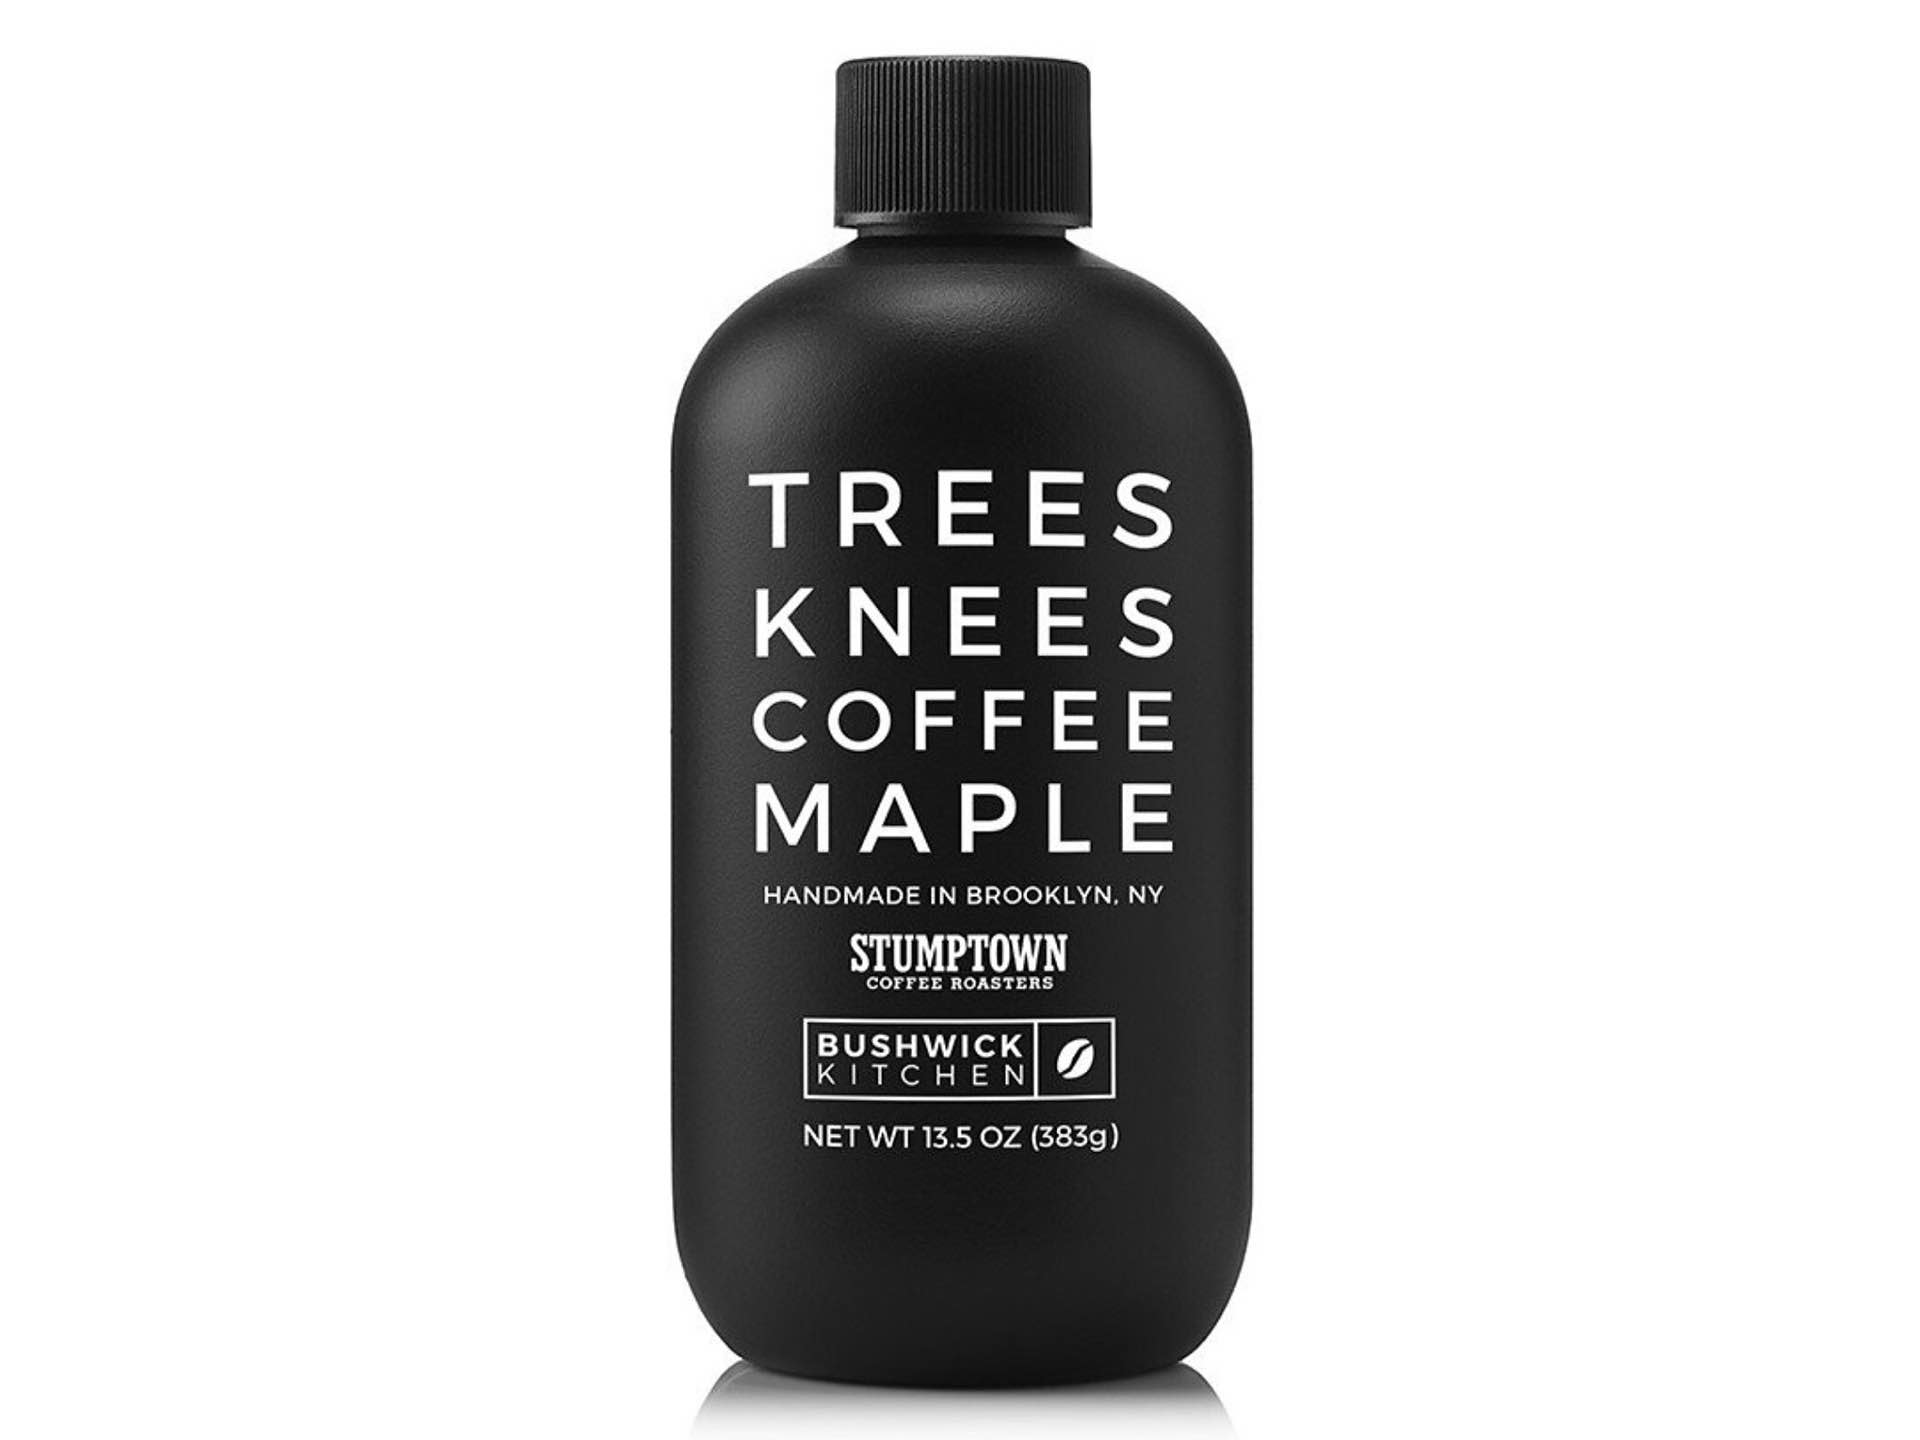 Bushwick Kitchen's "Trees Knees" coffee maple syrup. ($14 per 13.5oz bottle)